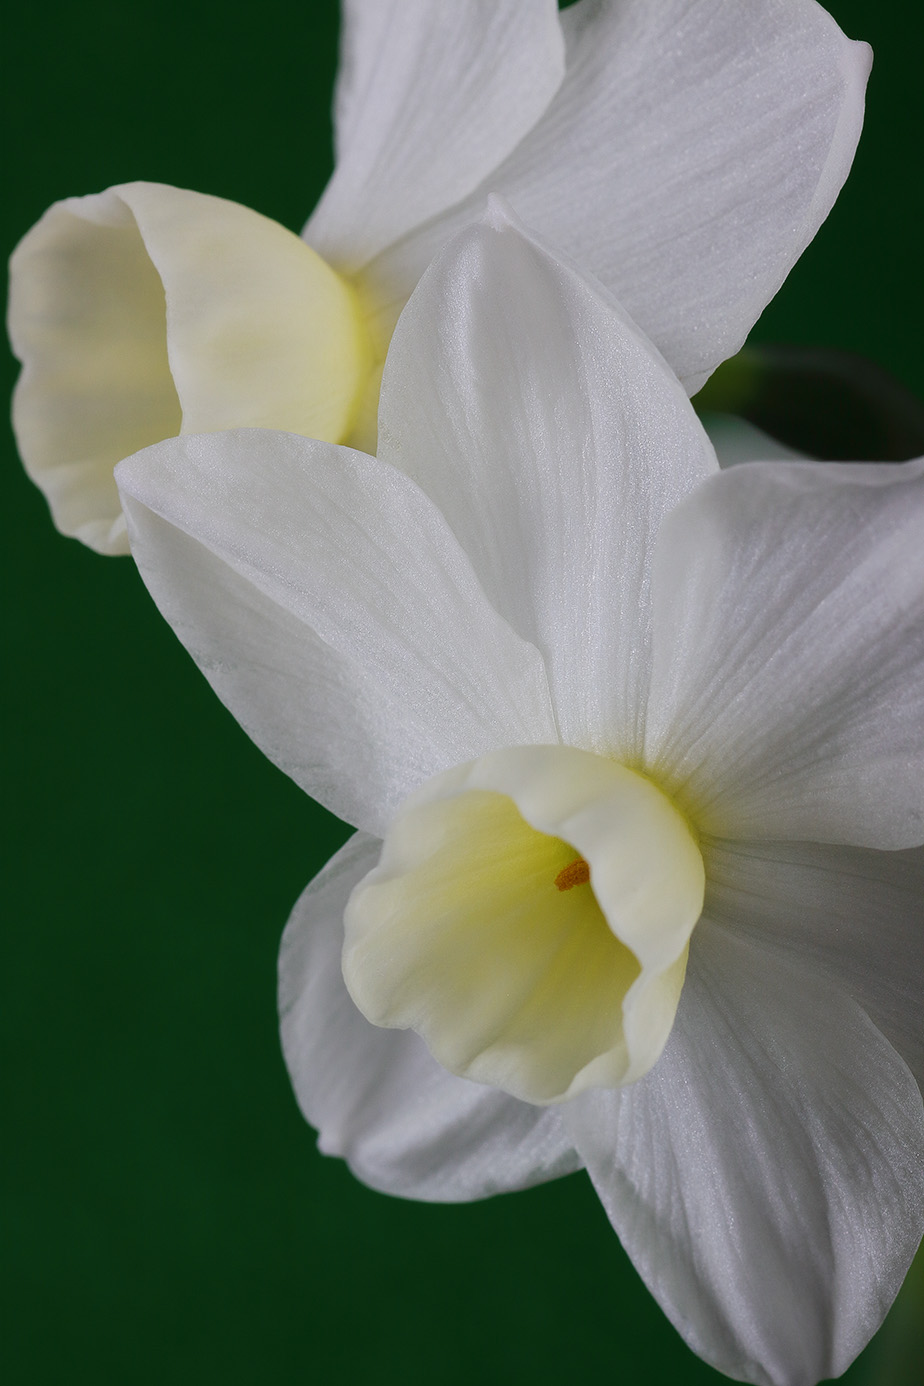 Scented 'Paperwhite' Daffodils